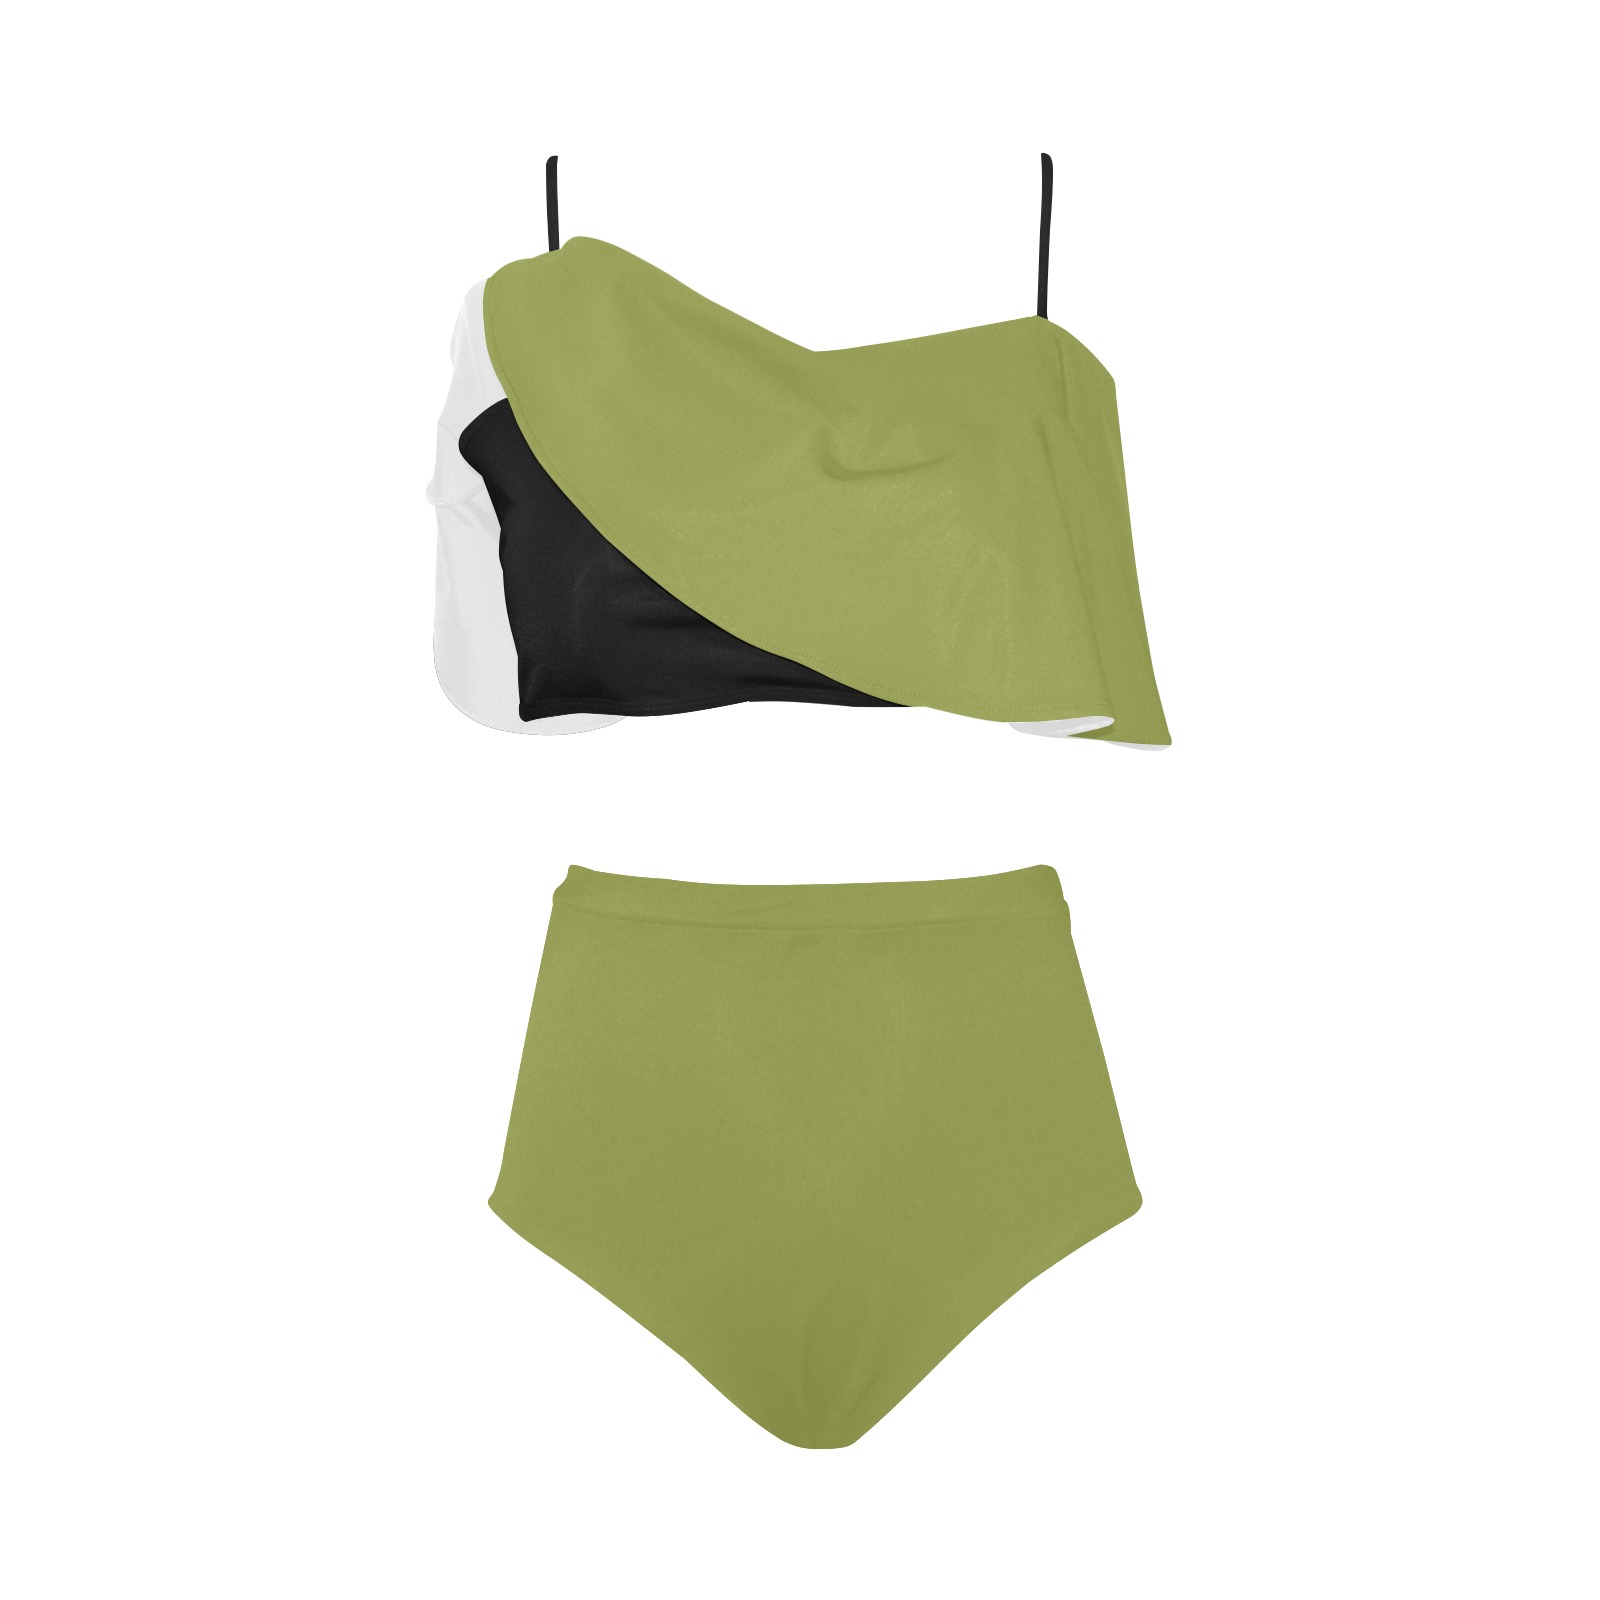 GREEN High Waisted Ruffle Bikini Set (Model S13)